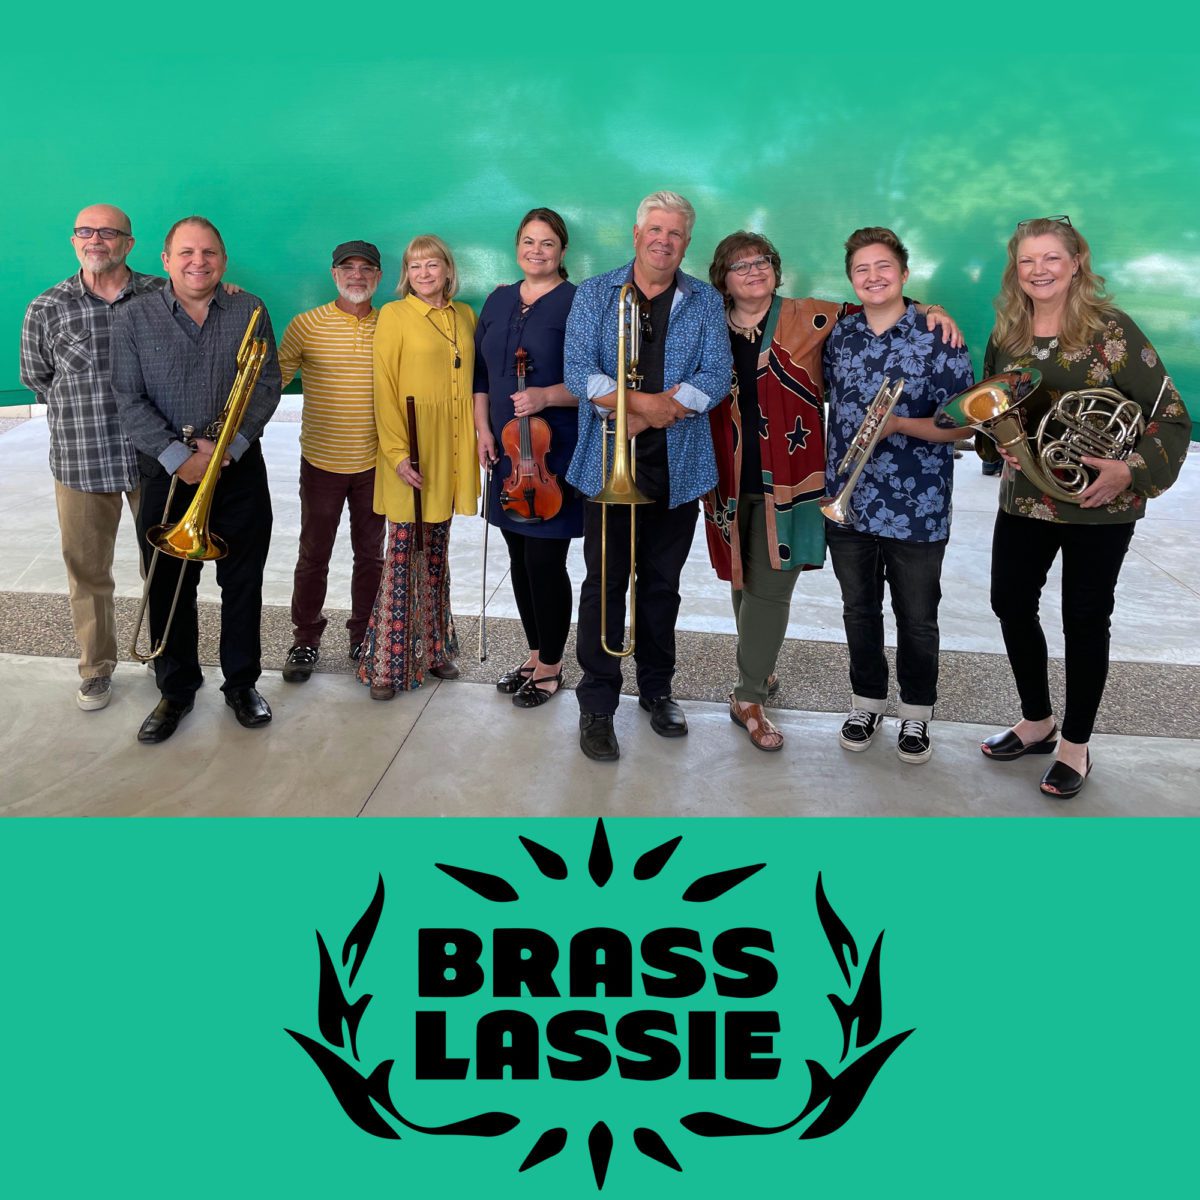 Brass Lassie promo image